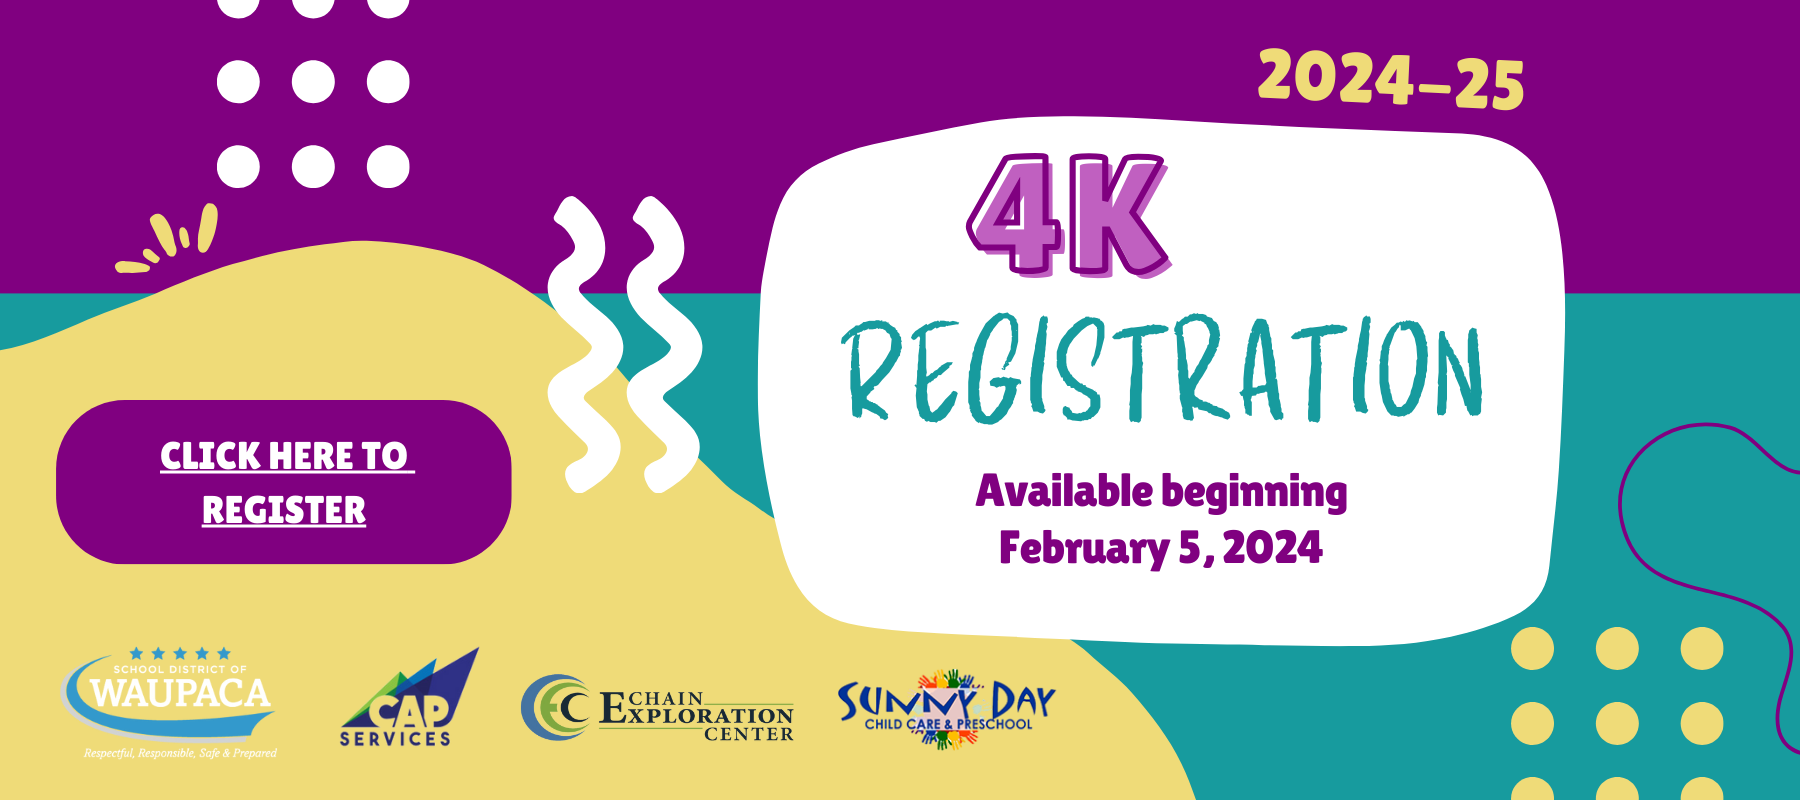 4K Registration available Monday, February 5, 2024